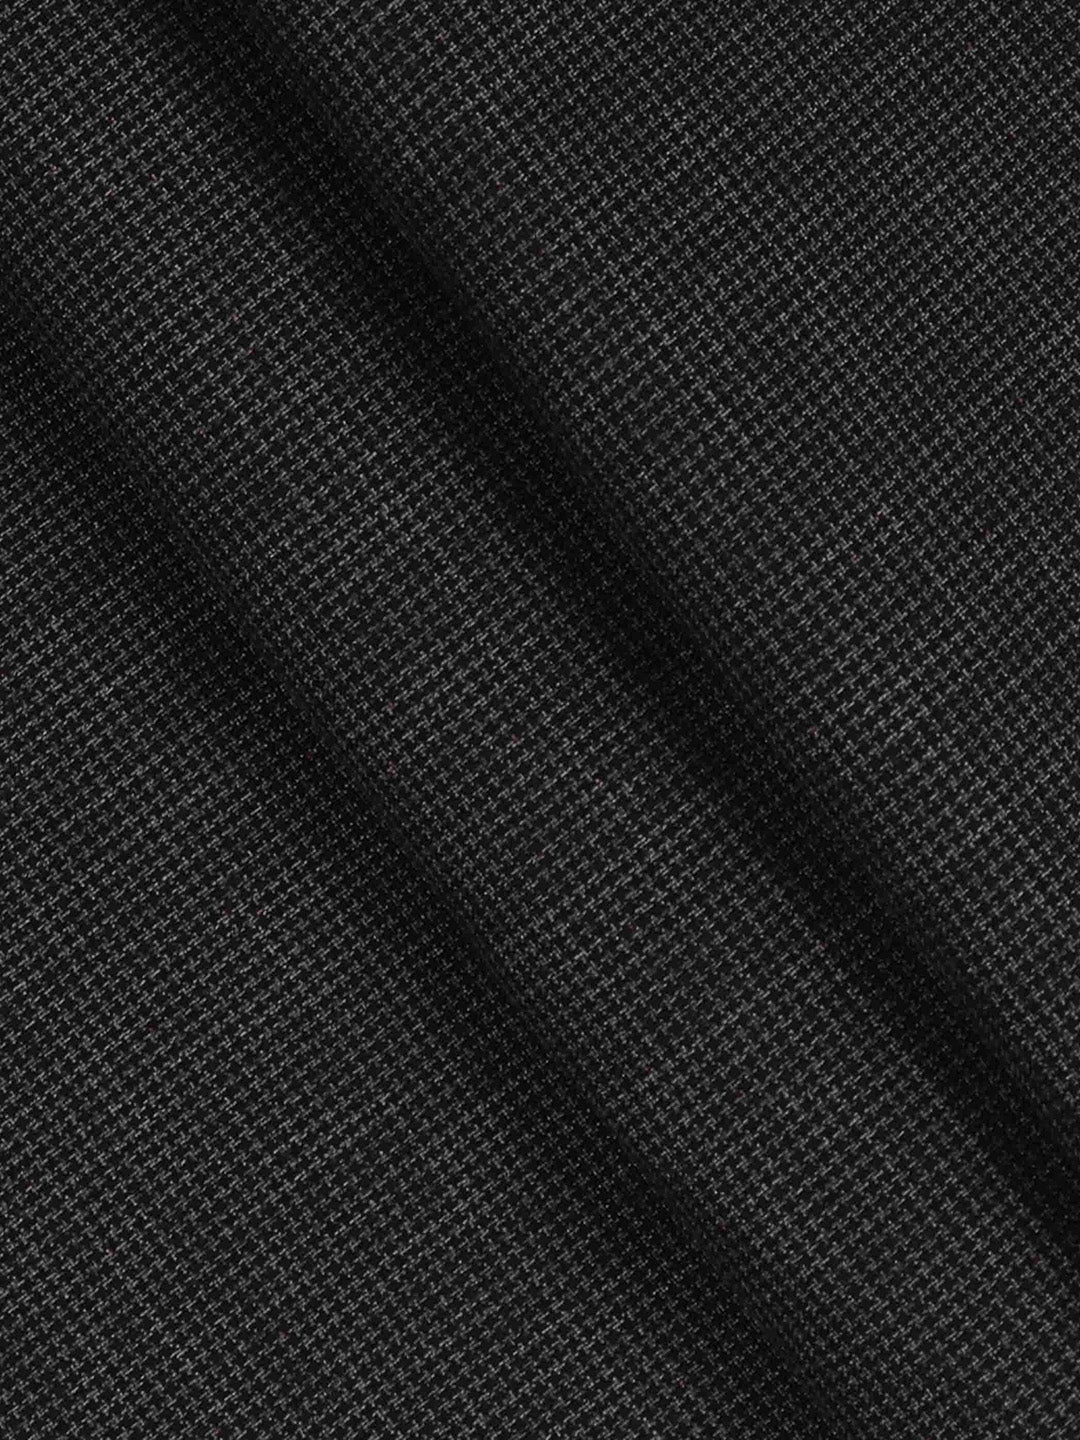 Premium Australian Merino Wool Blended Colour Checked Pants Fabric Dark Grey Mark Wool-Pattern view